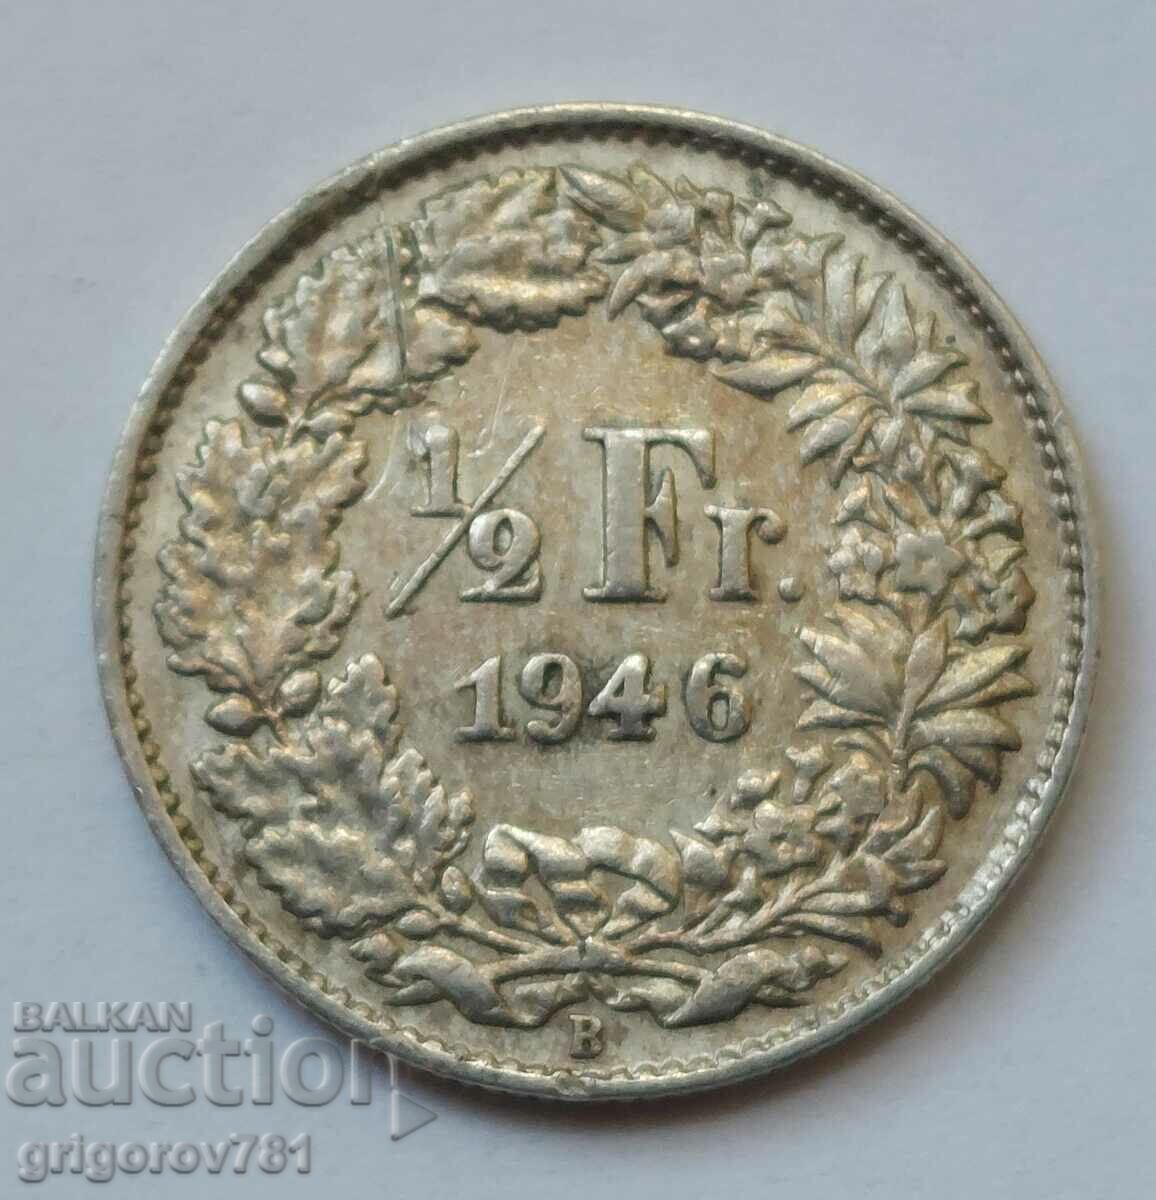 1/2 Franc Argint Elveția 1946 B - Monedă de argint #187